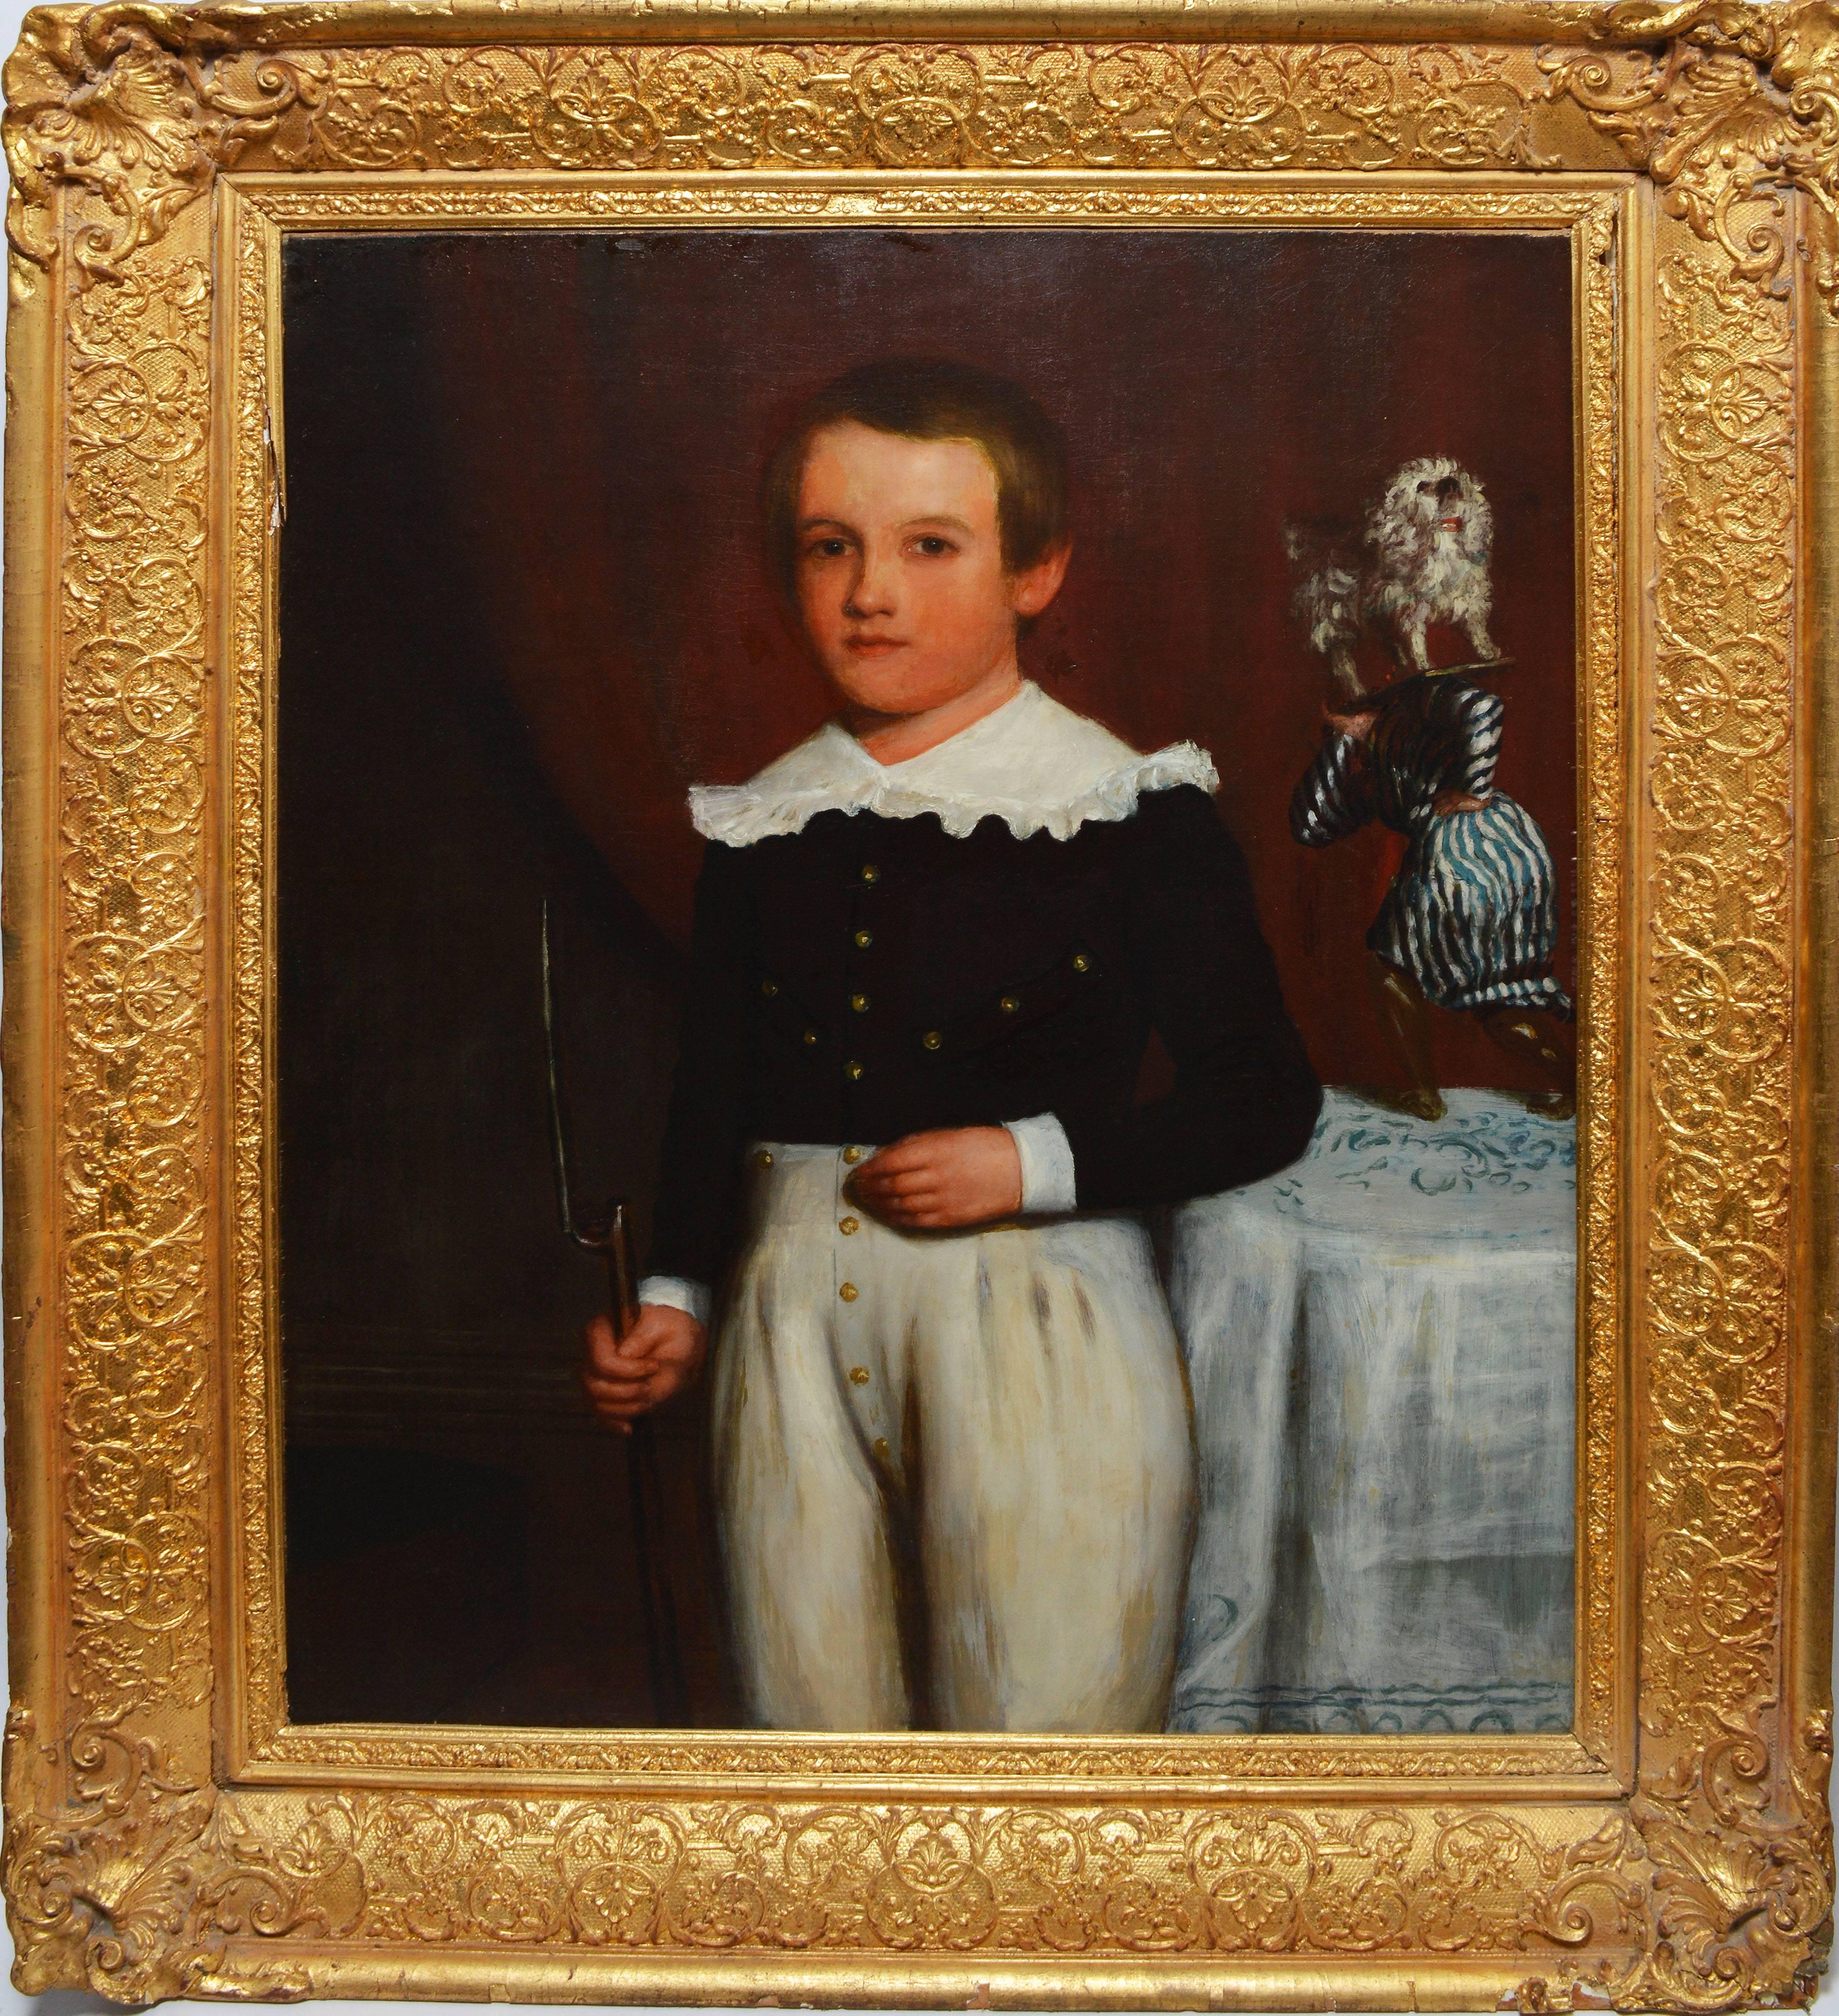 Unknown Portrait Painting - Early 19th Century American School Folk Art Portrait of a Boy